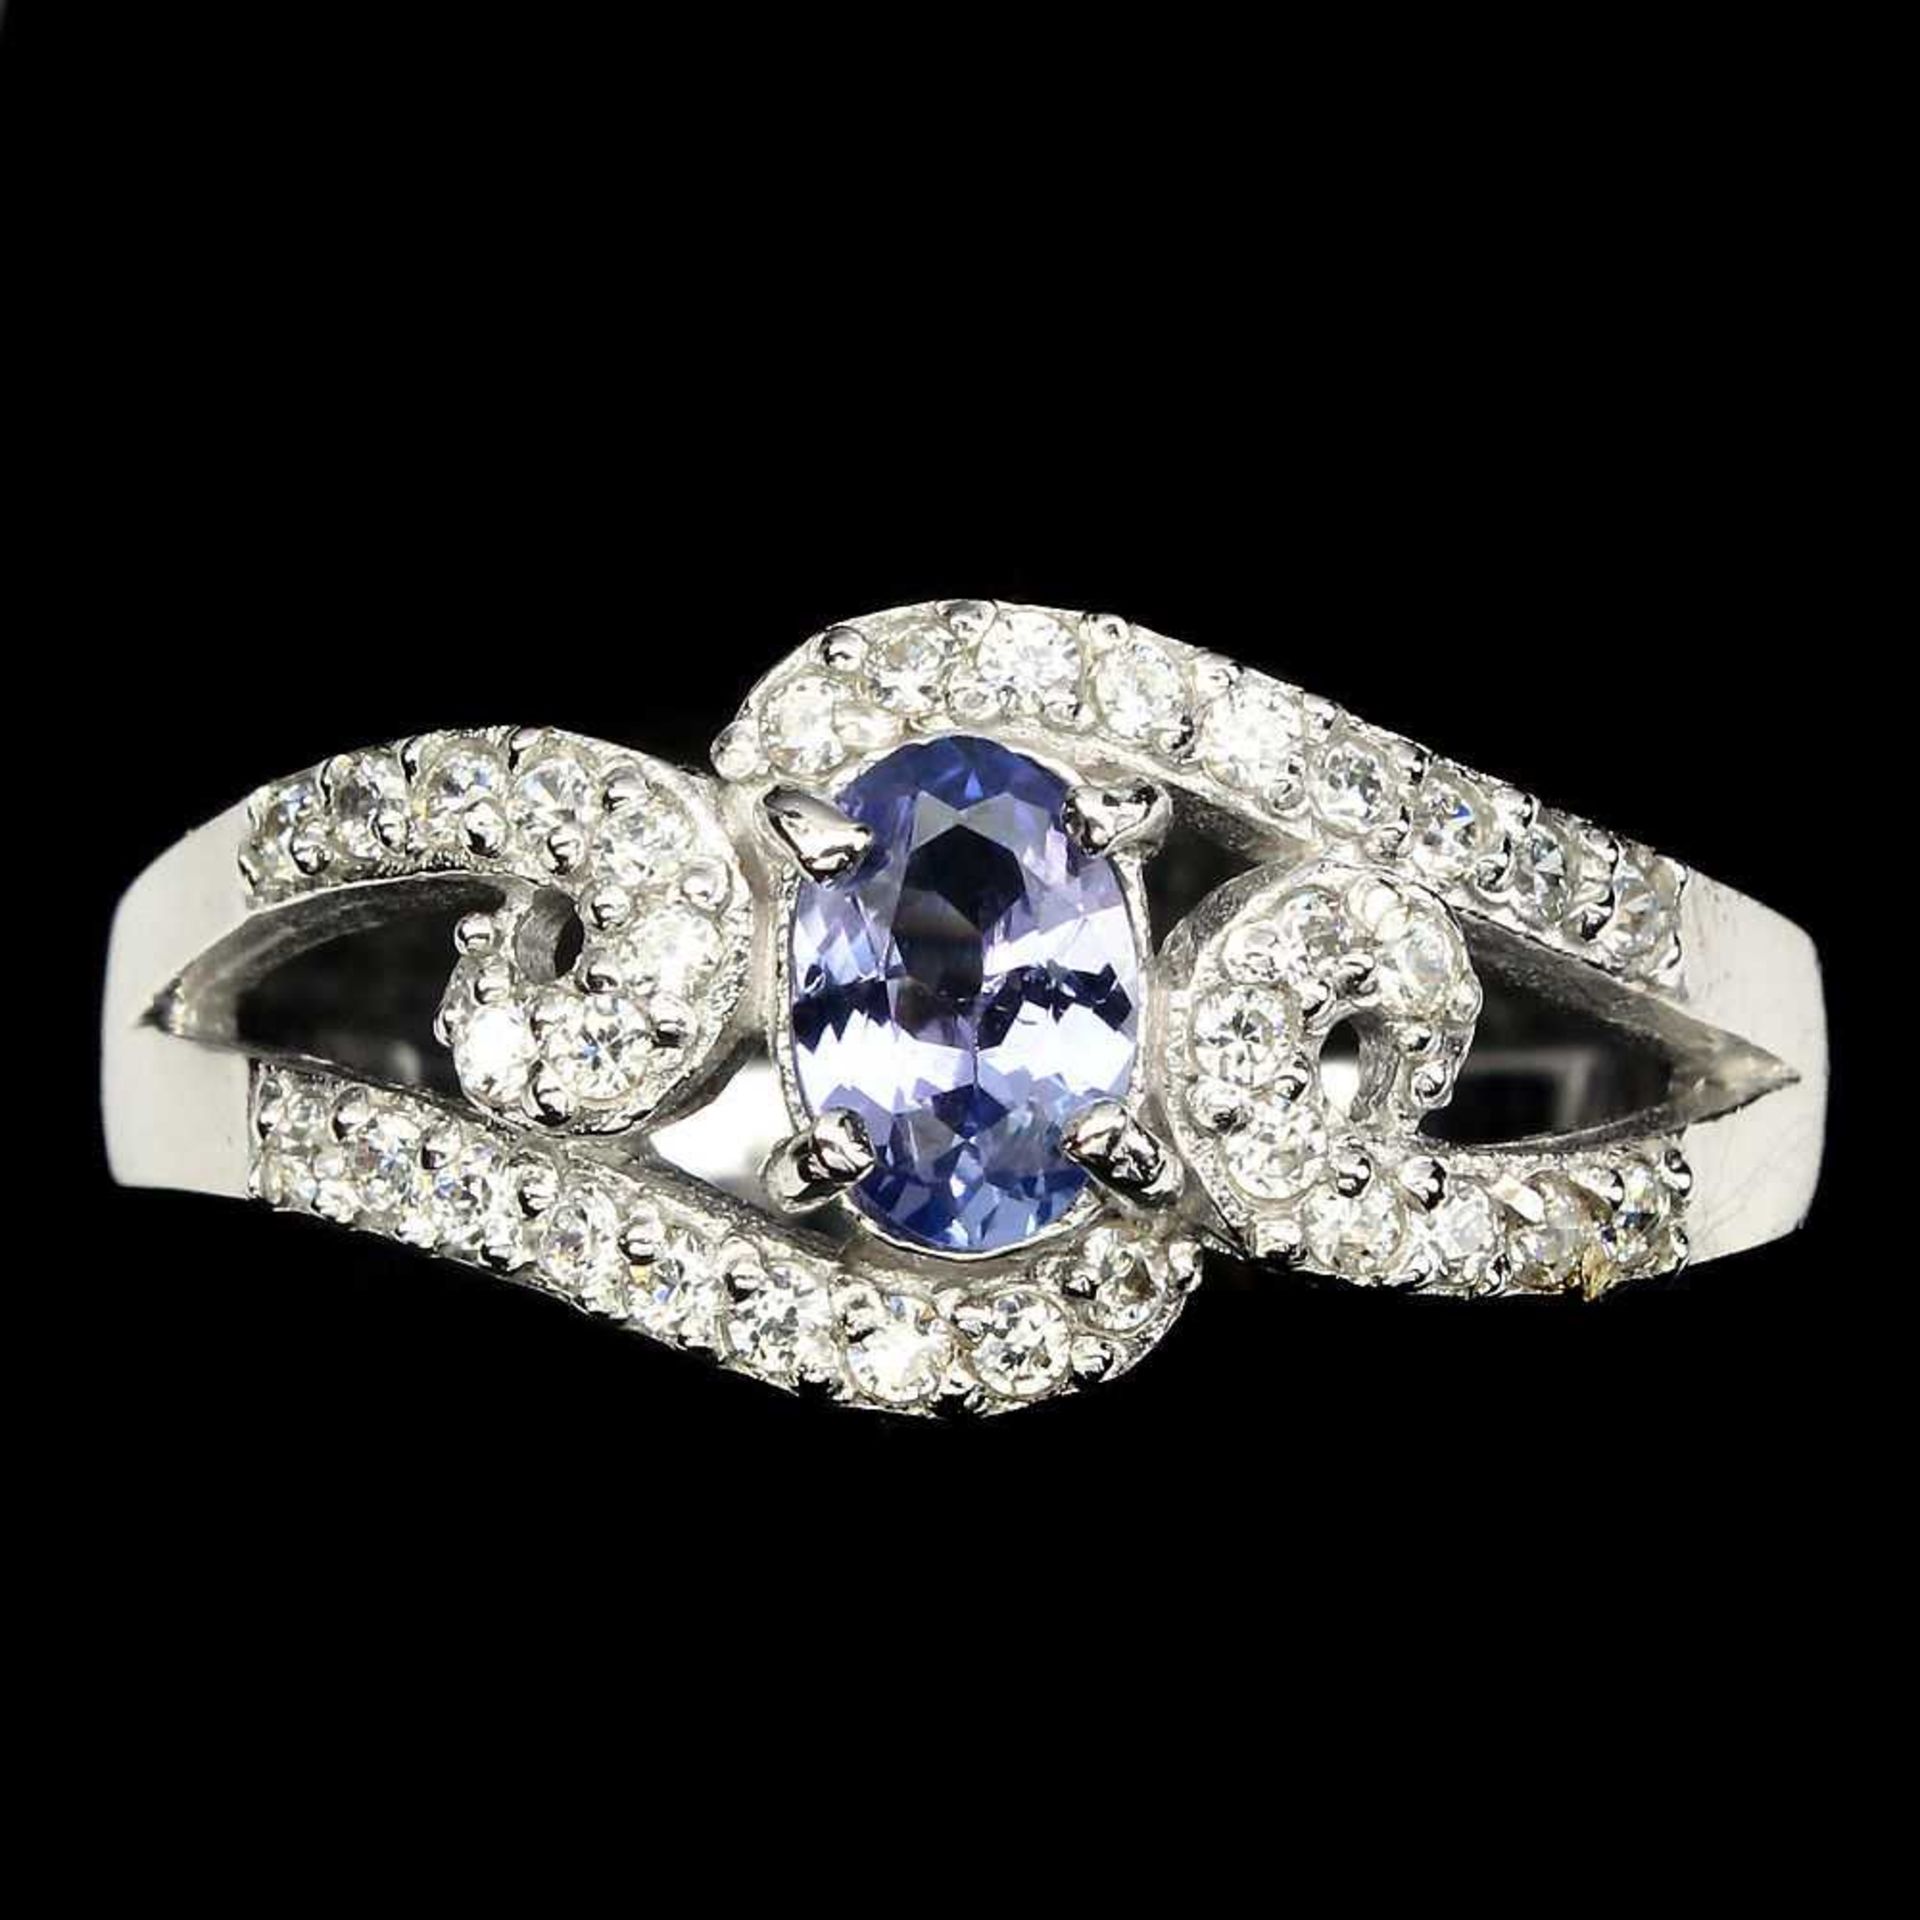 A Beautiful natural Tanzanite gemstone Ring - IF/ VVS Clarity - Transparent - Sparkling Cubic